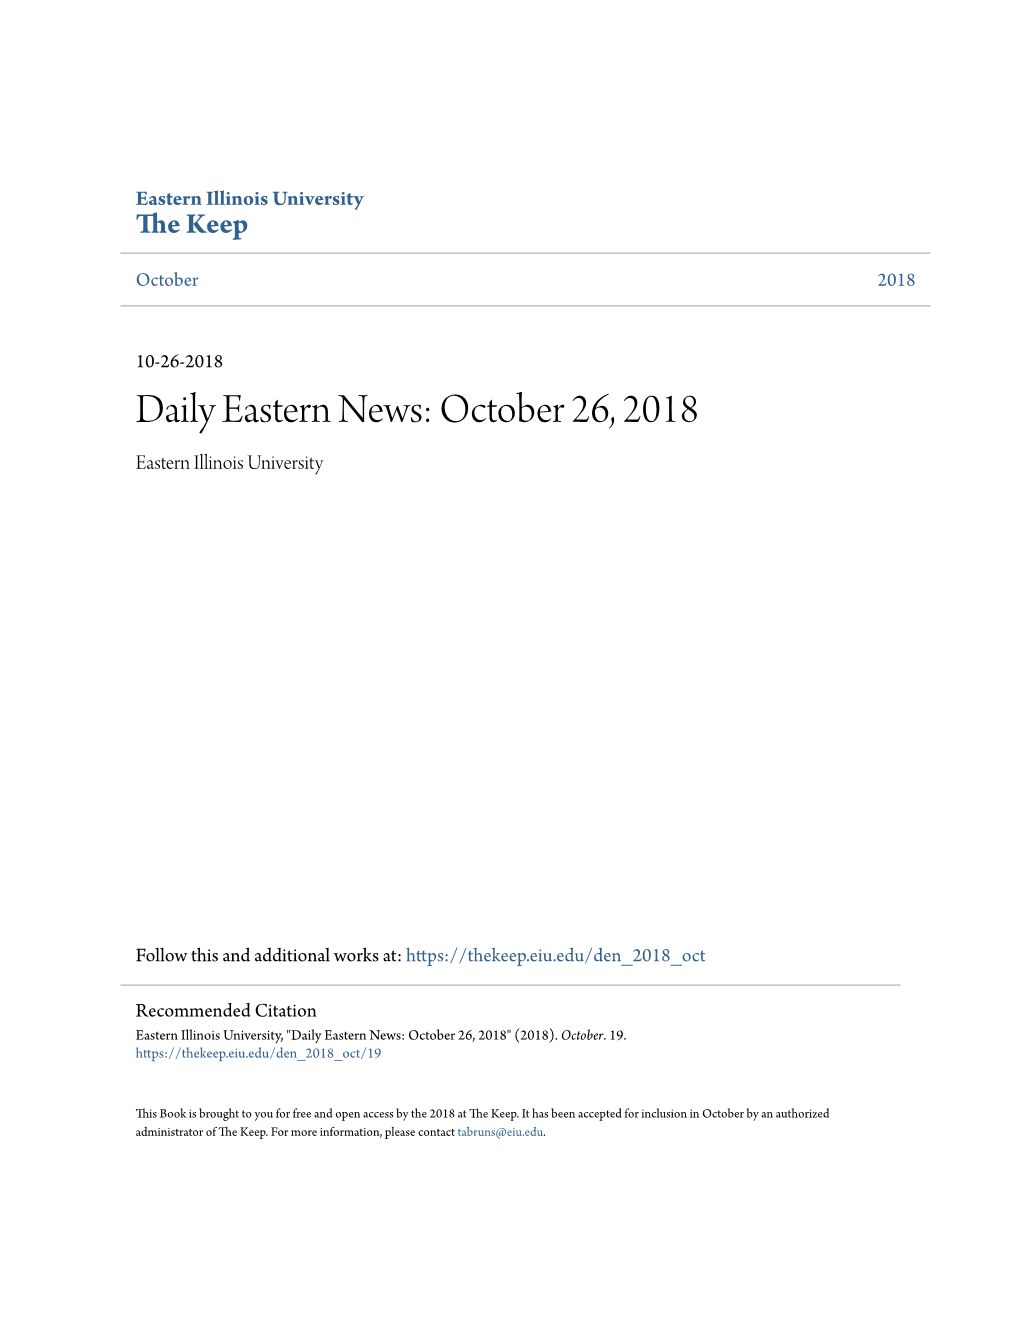 Daily Eastern News: October 26, 2018 Eastern Illinois University